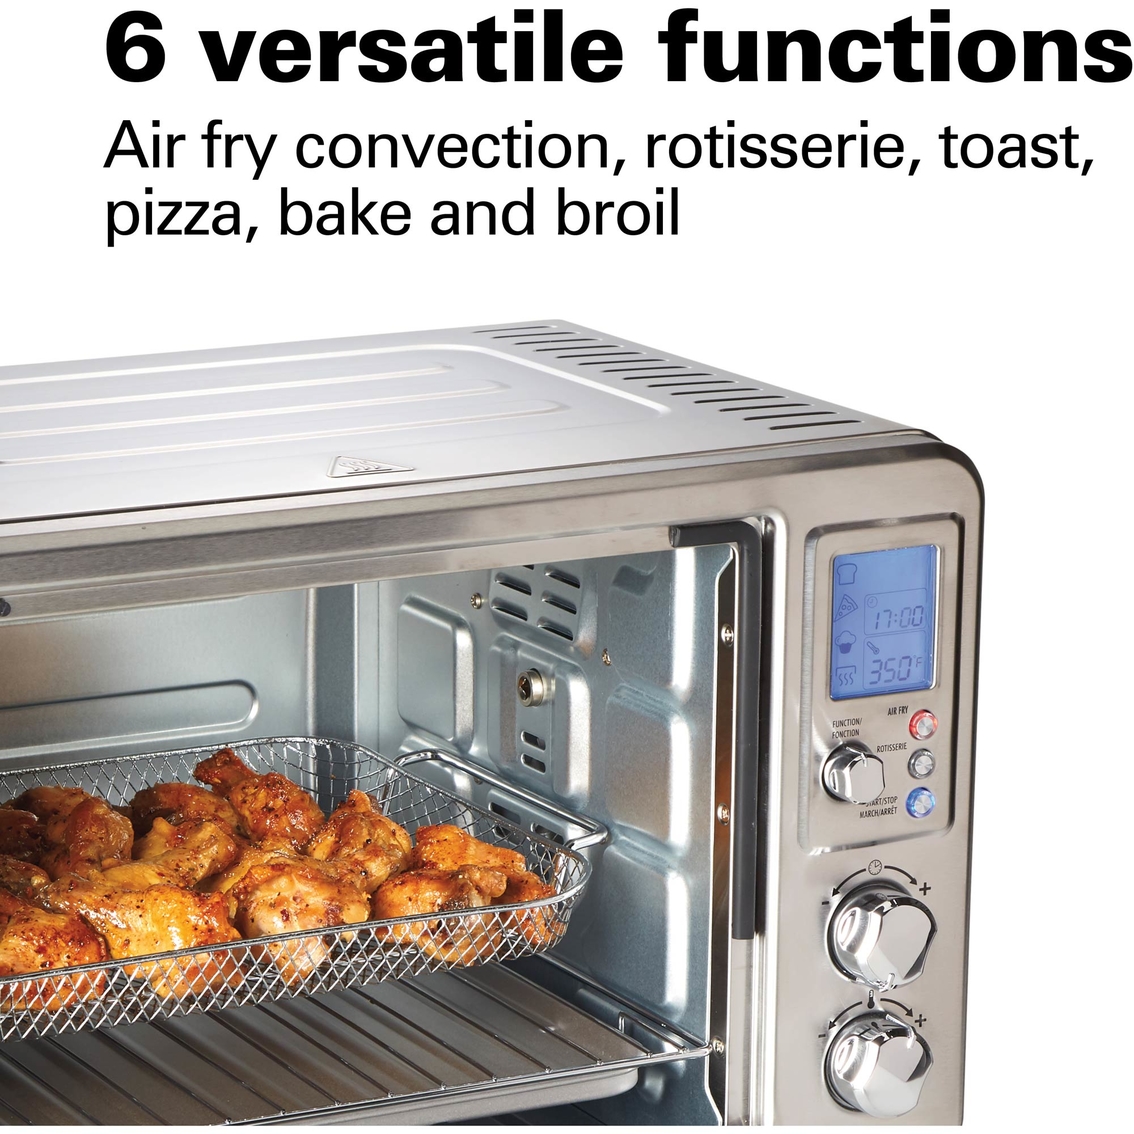 Hamilton Beach Sure-Crisp Digital Air Fryer Toaster Oven with Rotisserie - Image 5 of 6